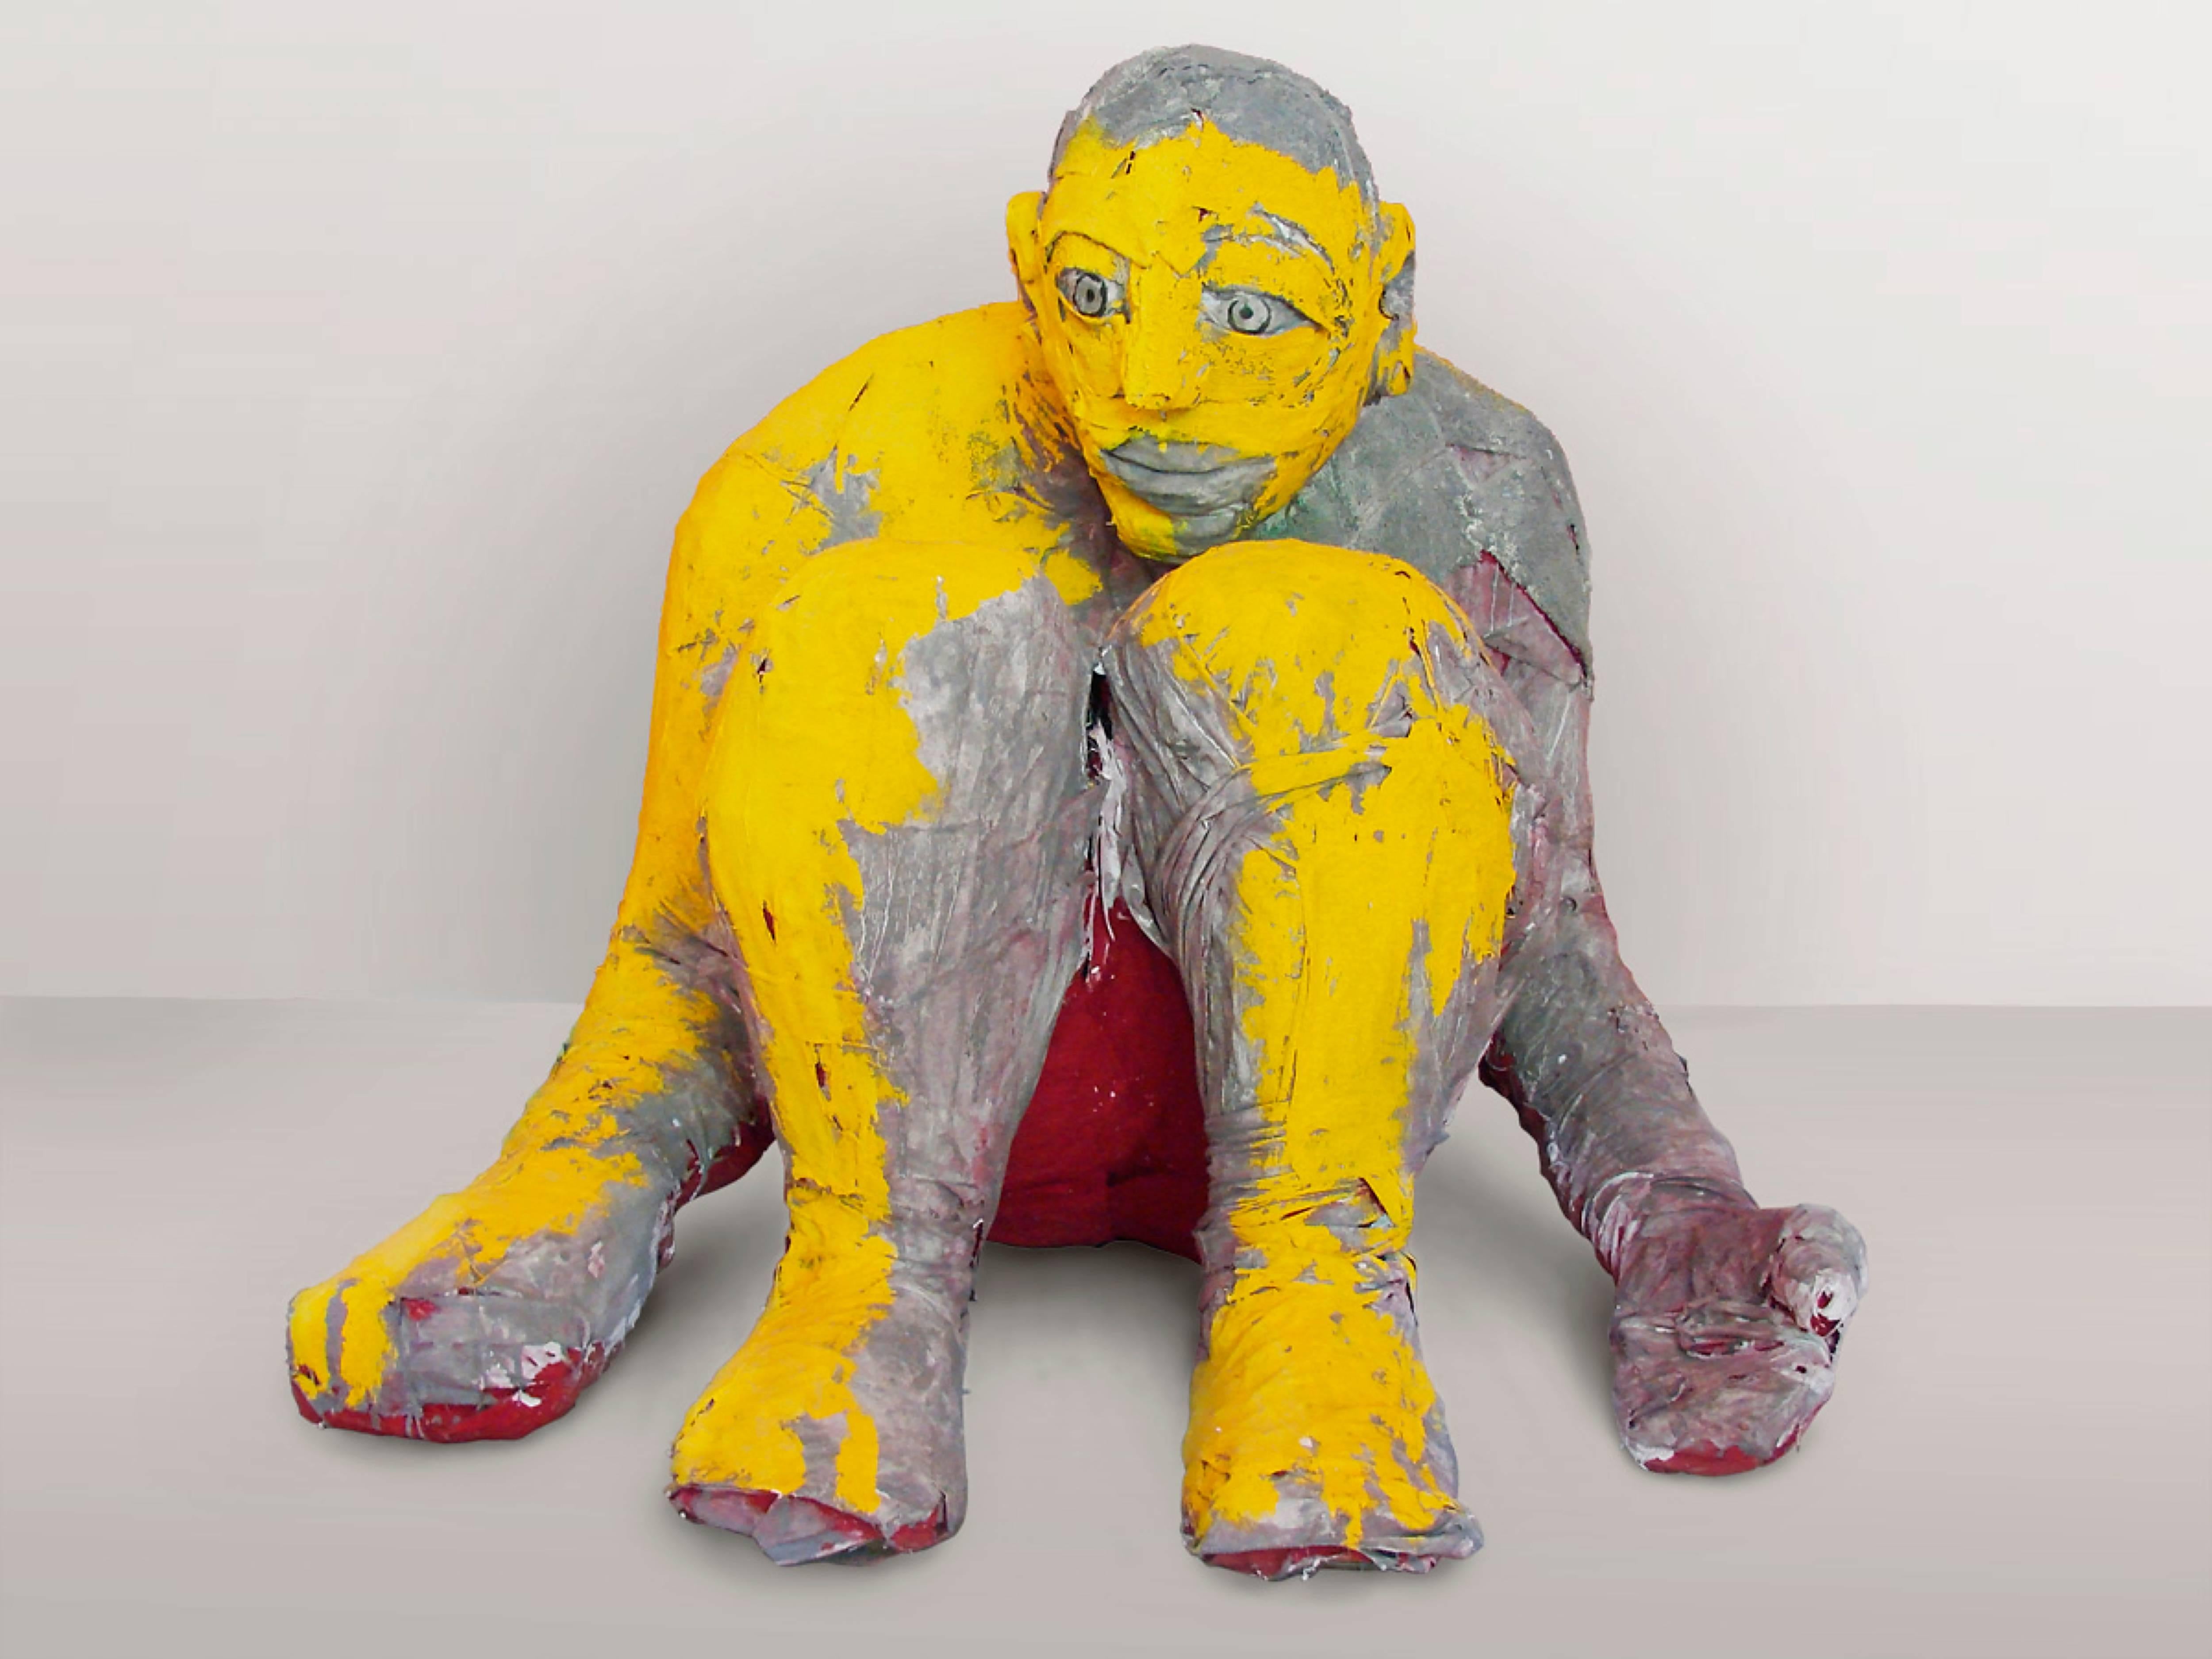 Alexandru Rădvan Figurative Sculpture - Ulysses - Contemporary, Sculpture, Figurative, Yellow, Gray, Human, Hero